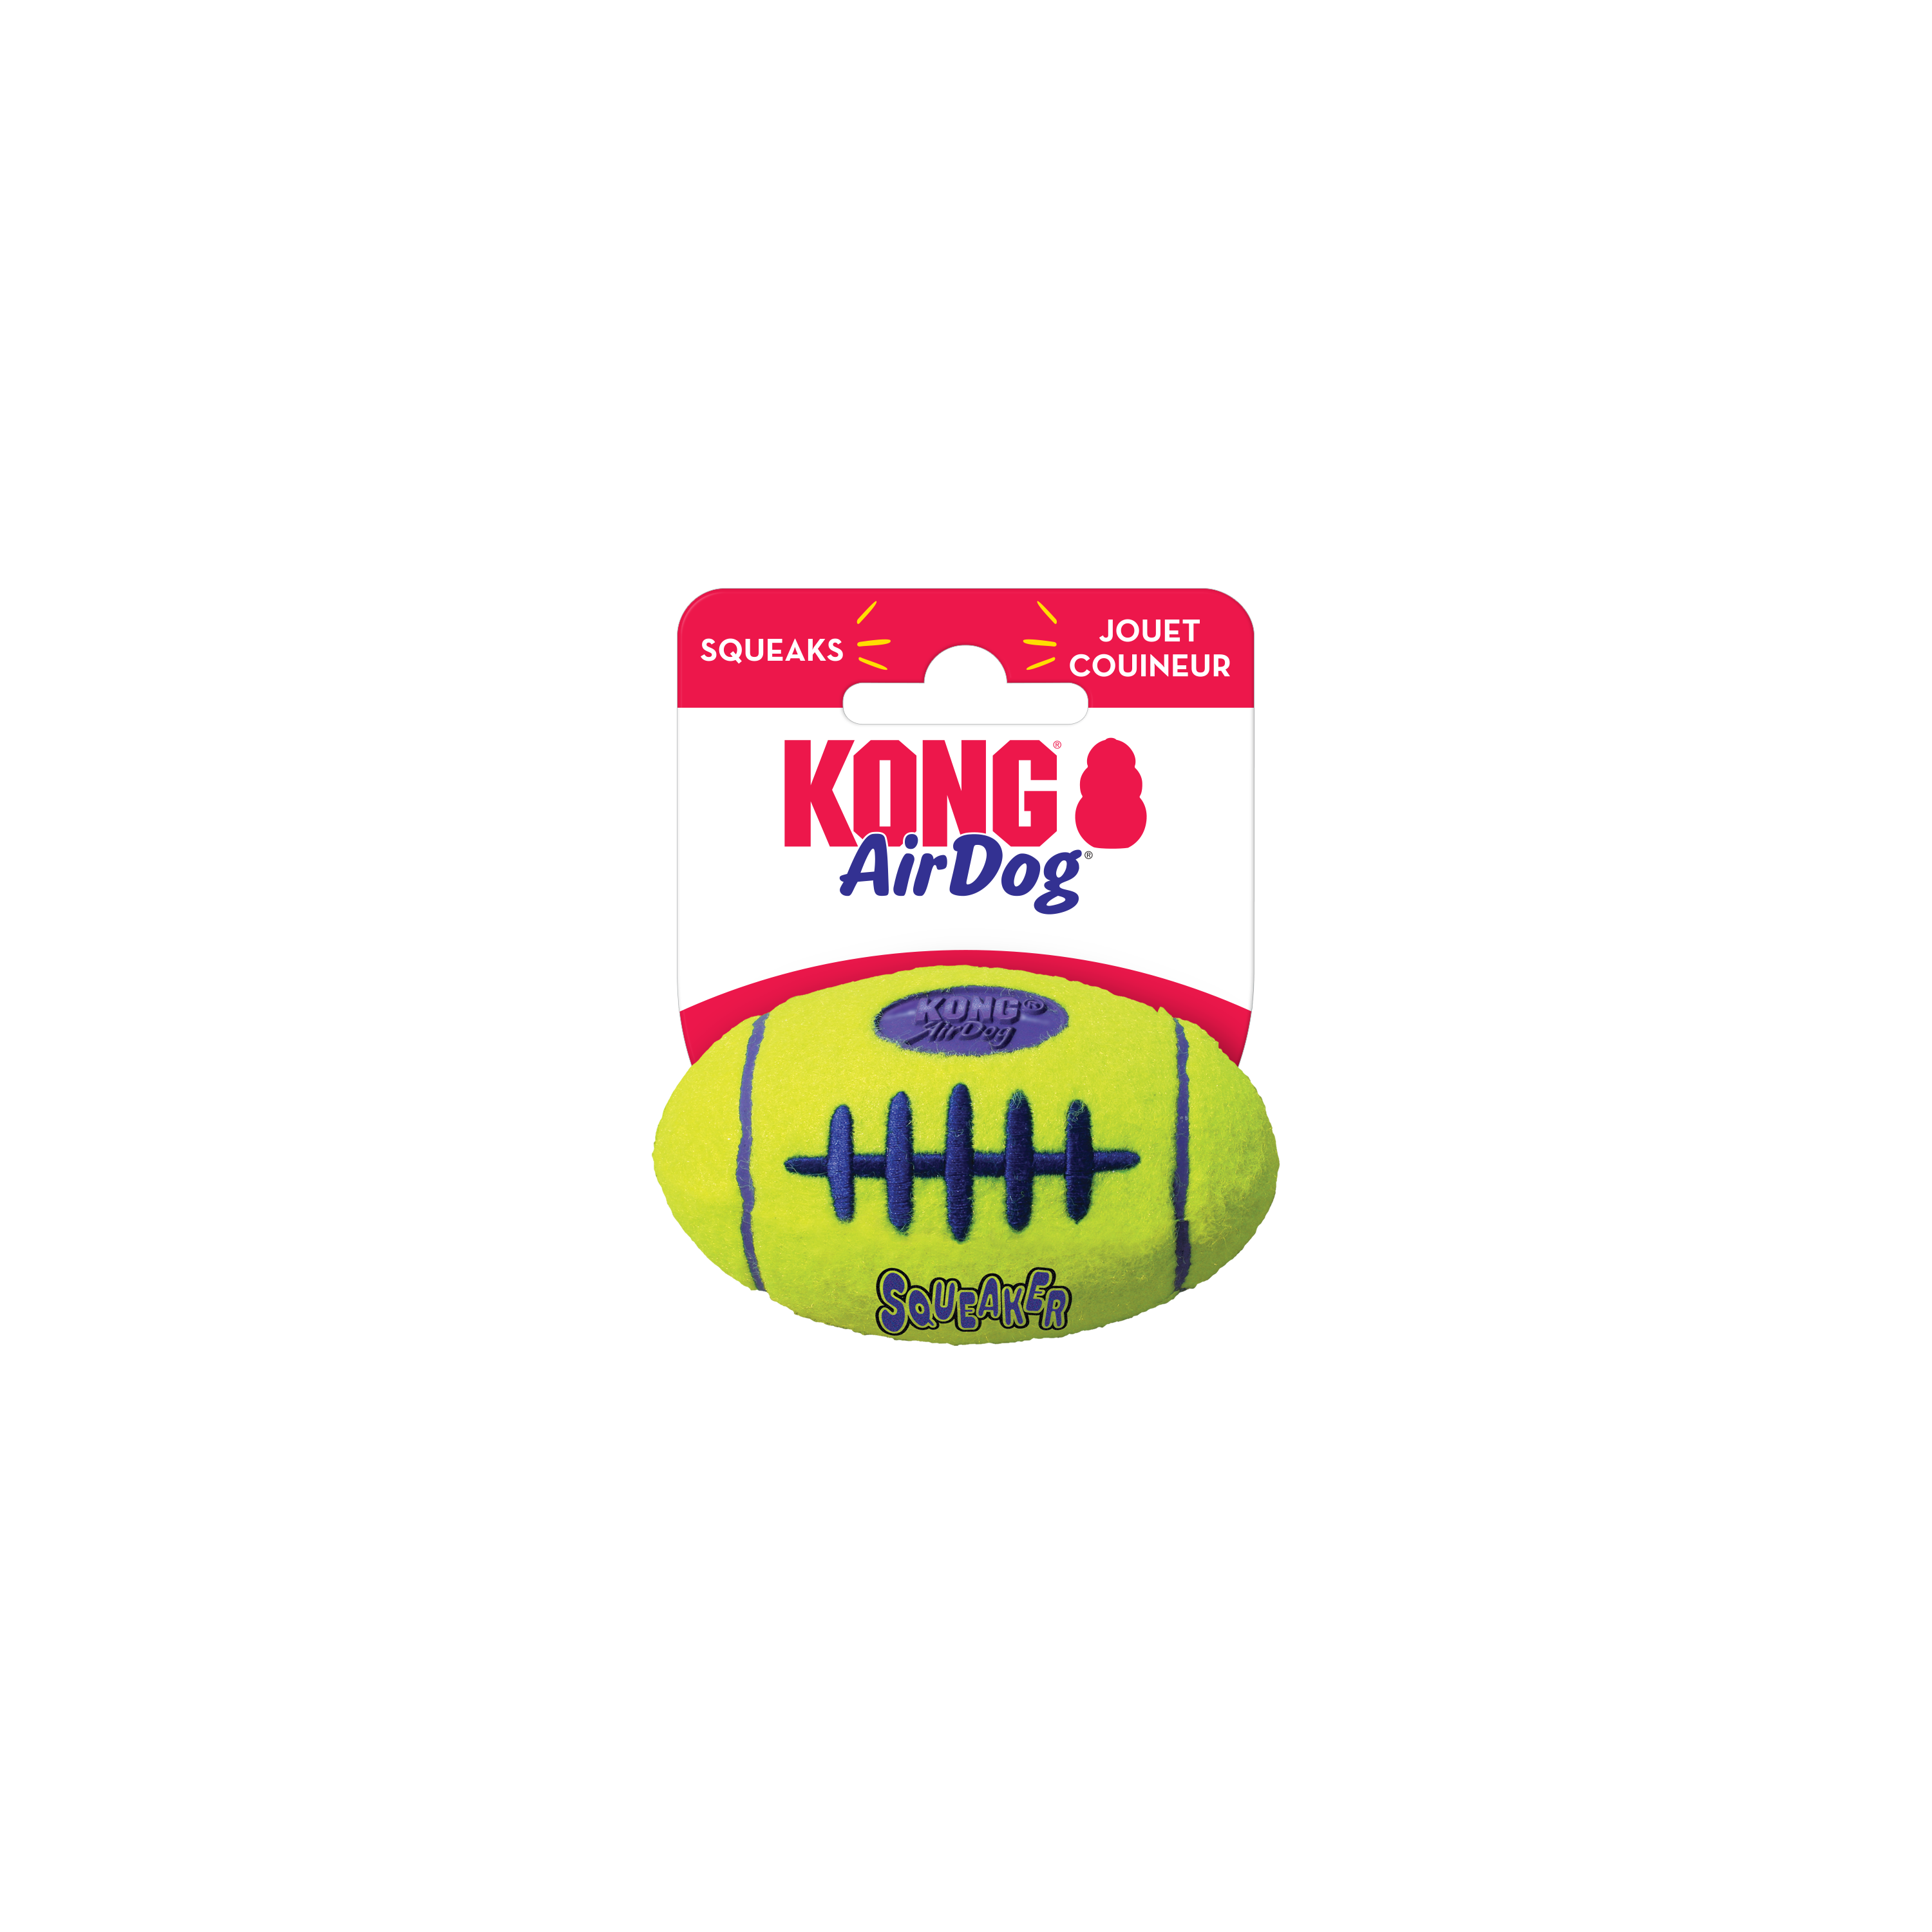 AirDog Squeaker Football onpack termékkép